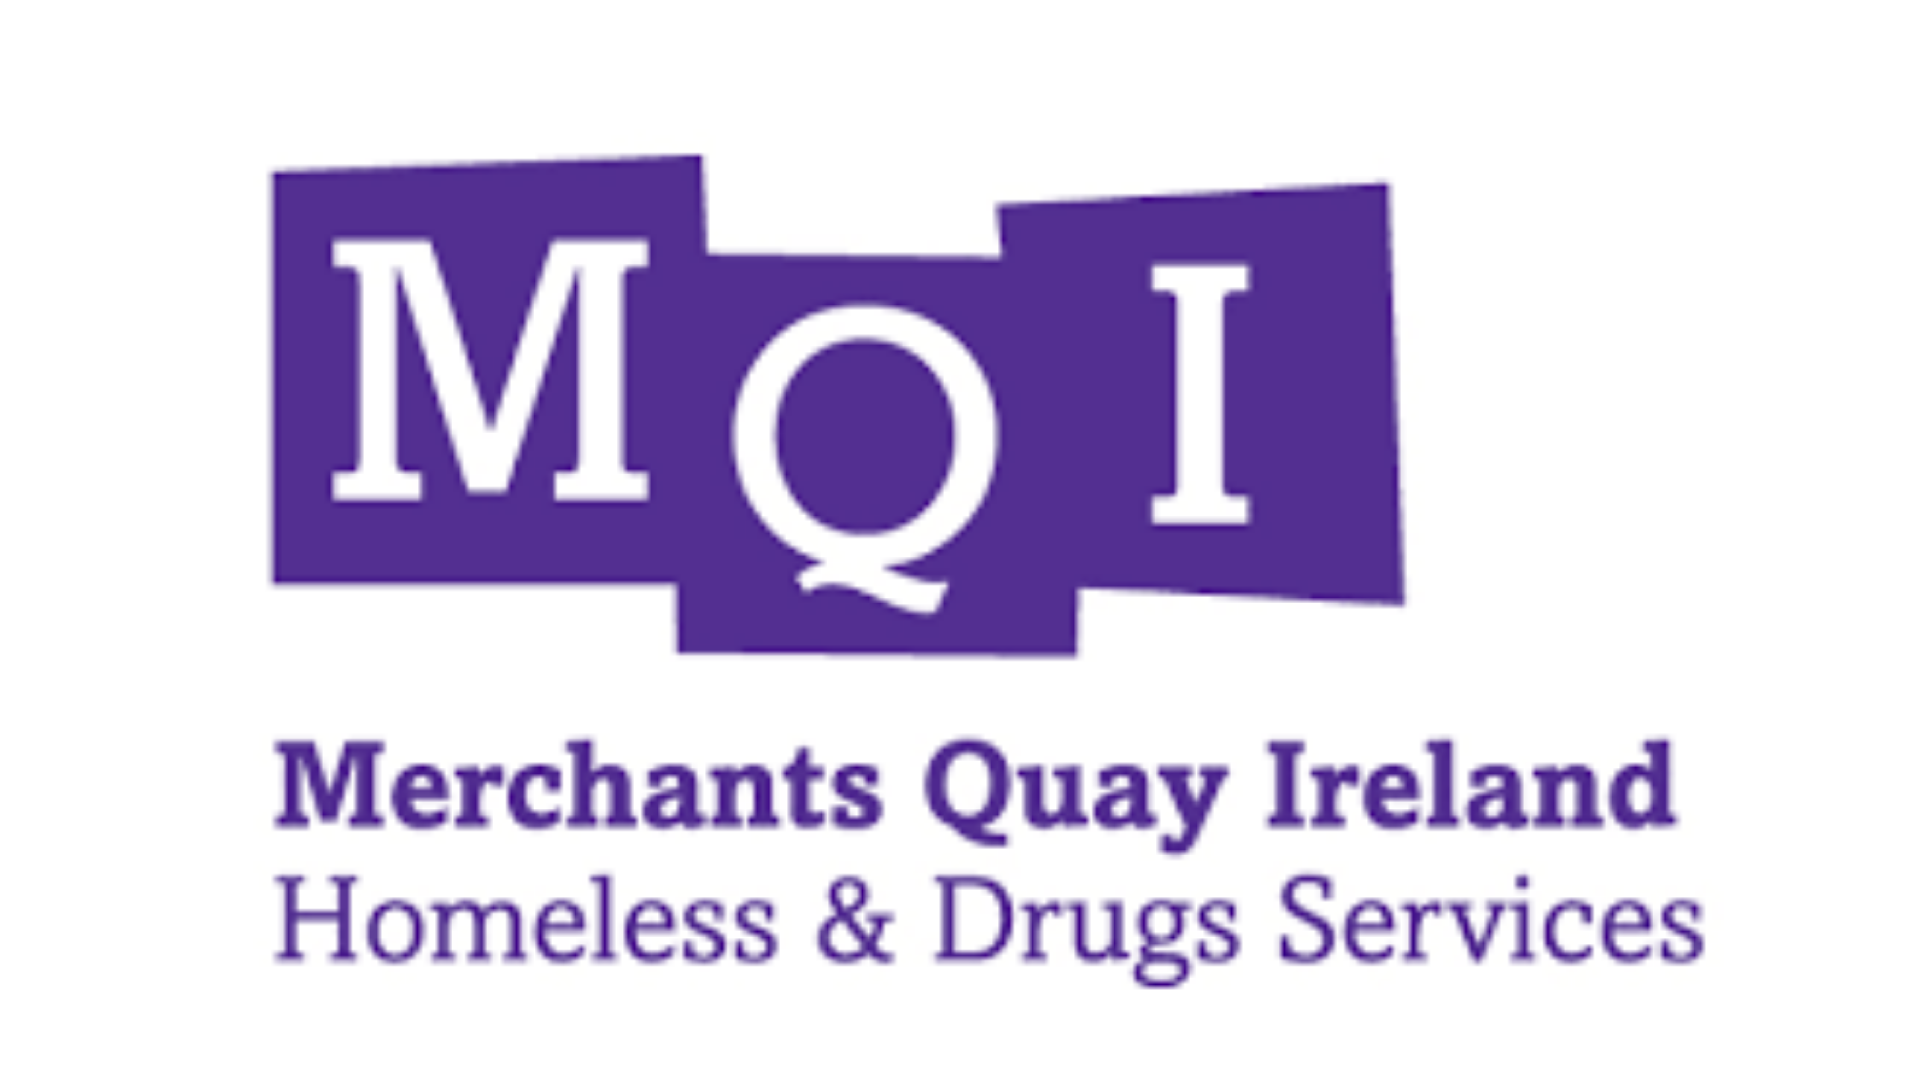 Merchants Quay Midlands (over 18’s Drug & Alcohol Treatment & Supports Service)